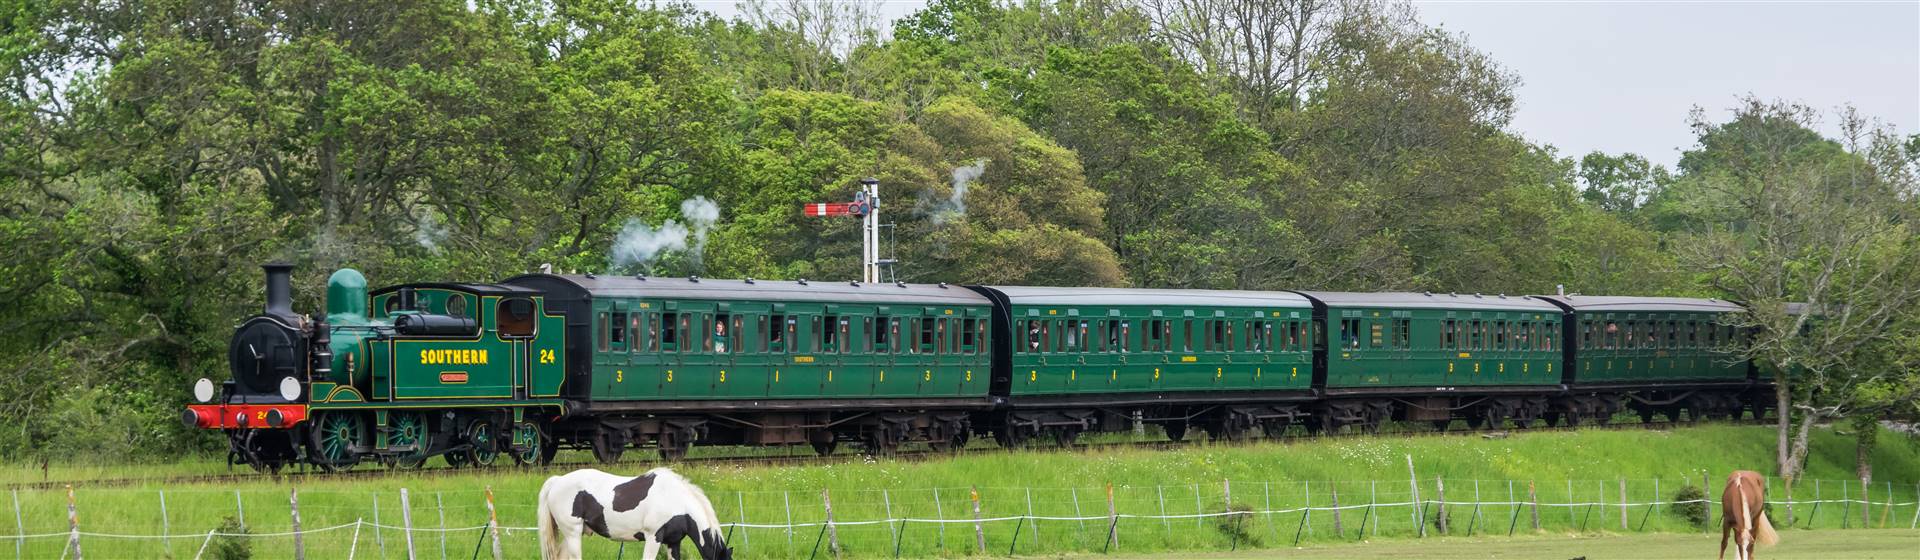 <img src="iwsr-johnfaulkner.jpeg" alt="Isle of Wight Steam Railway/">